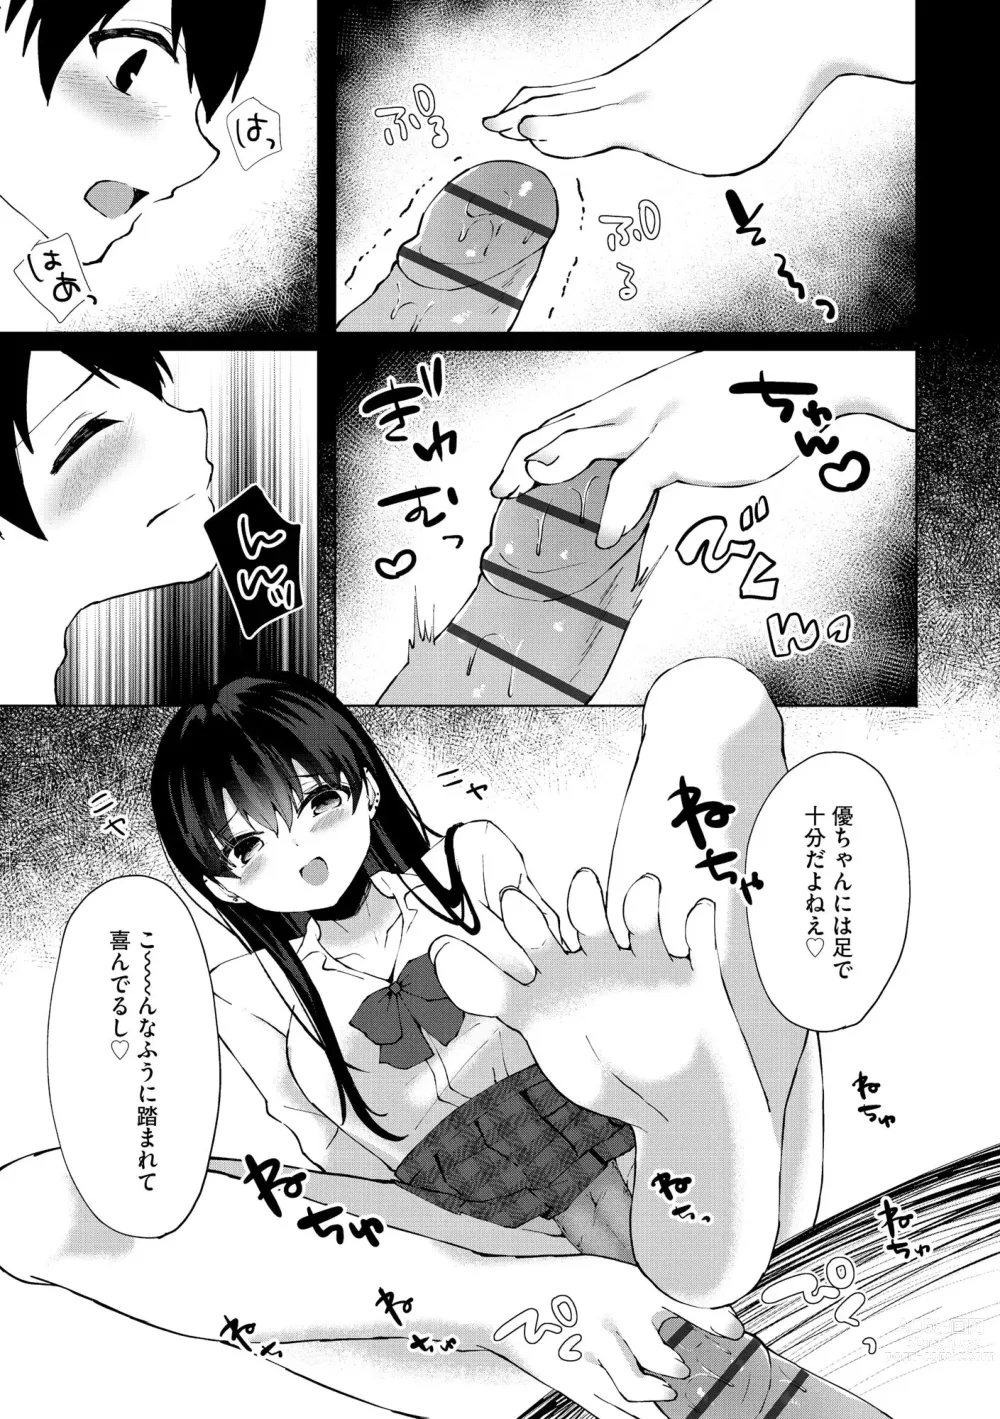 Page 17 of manga Cyberia Plus Vol. 12